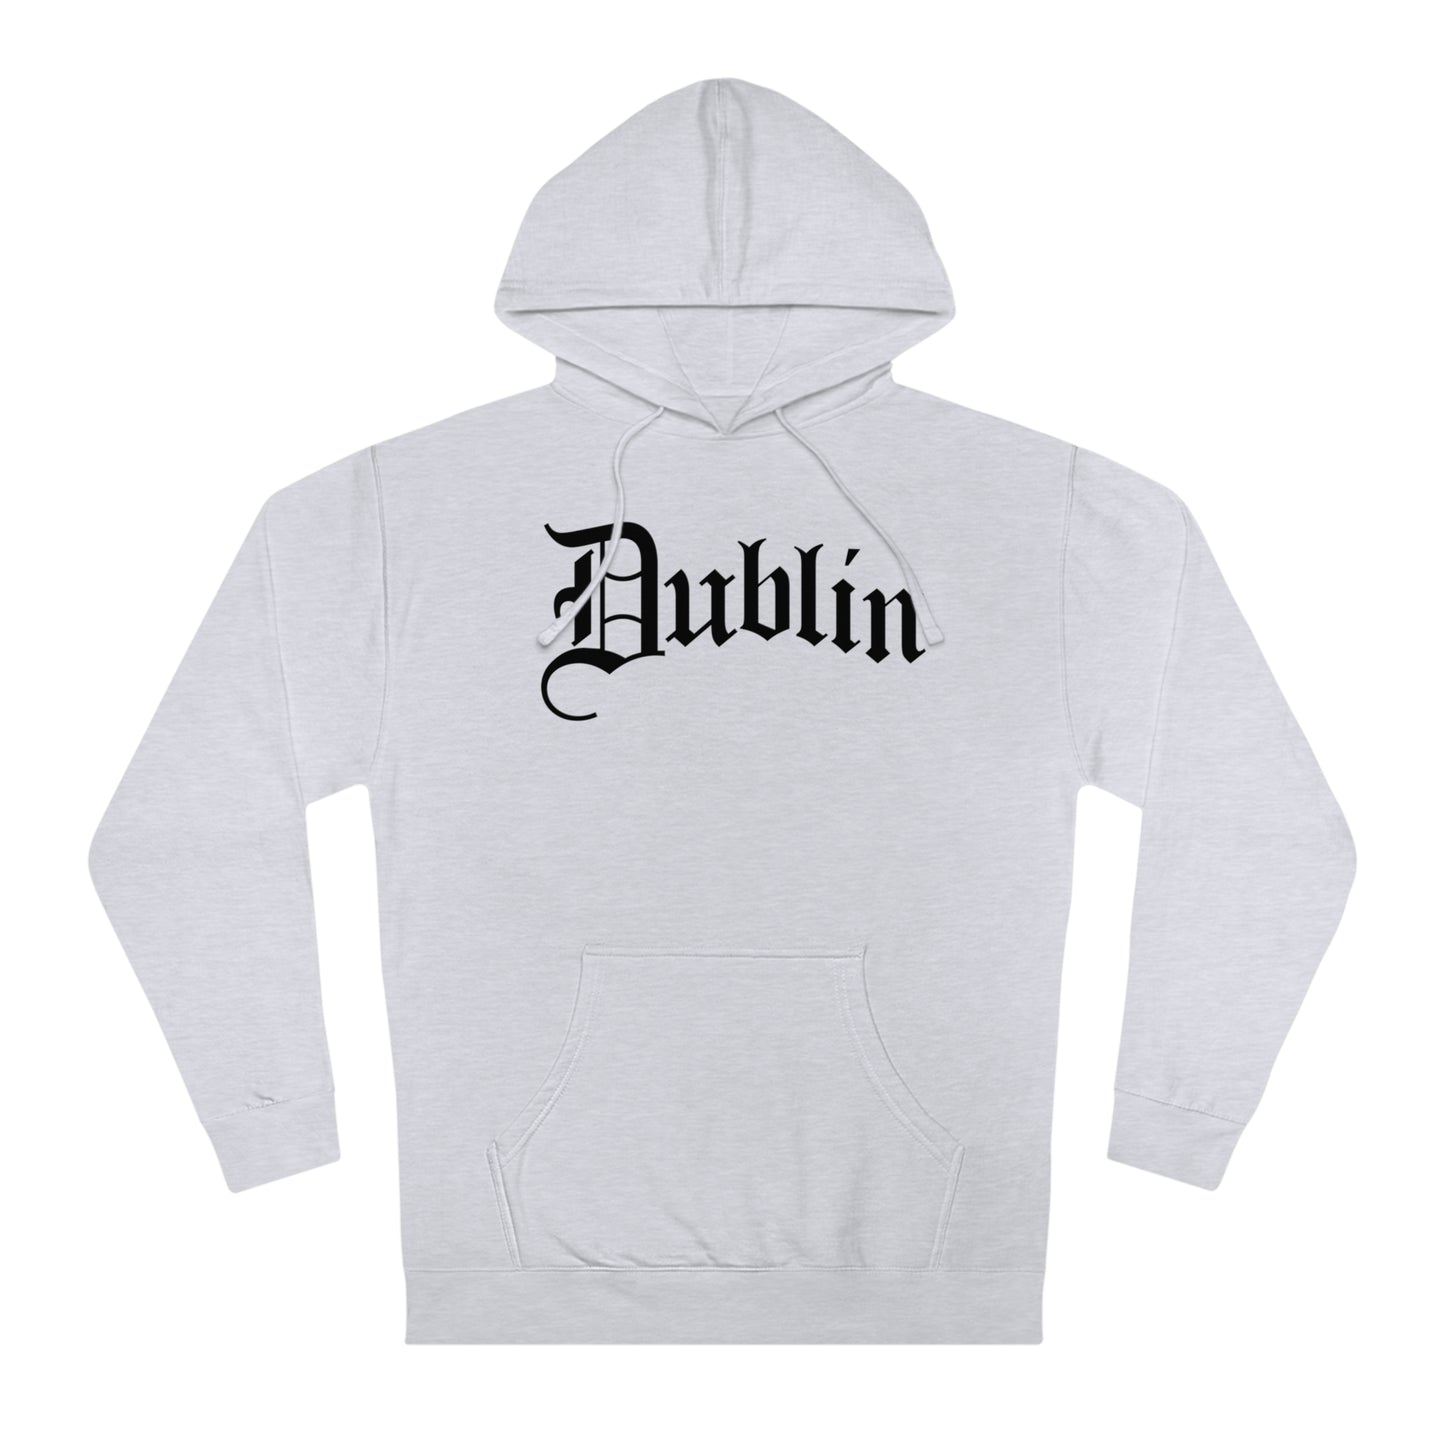 DUBLIN (old english script arched)-Unisex Hooded Sweatshirt